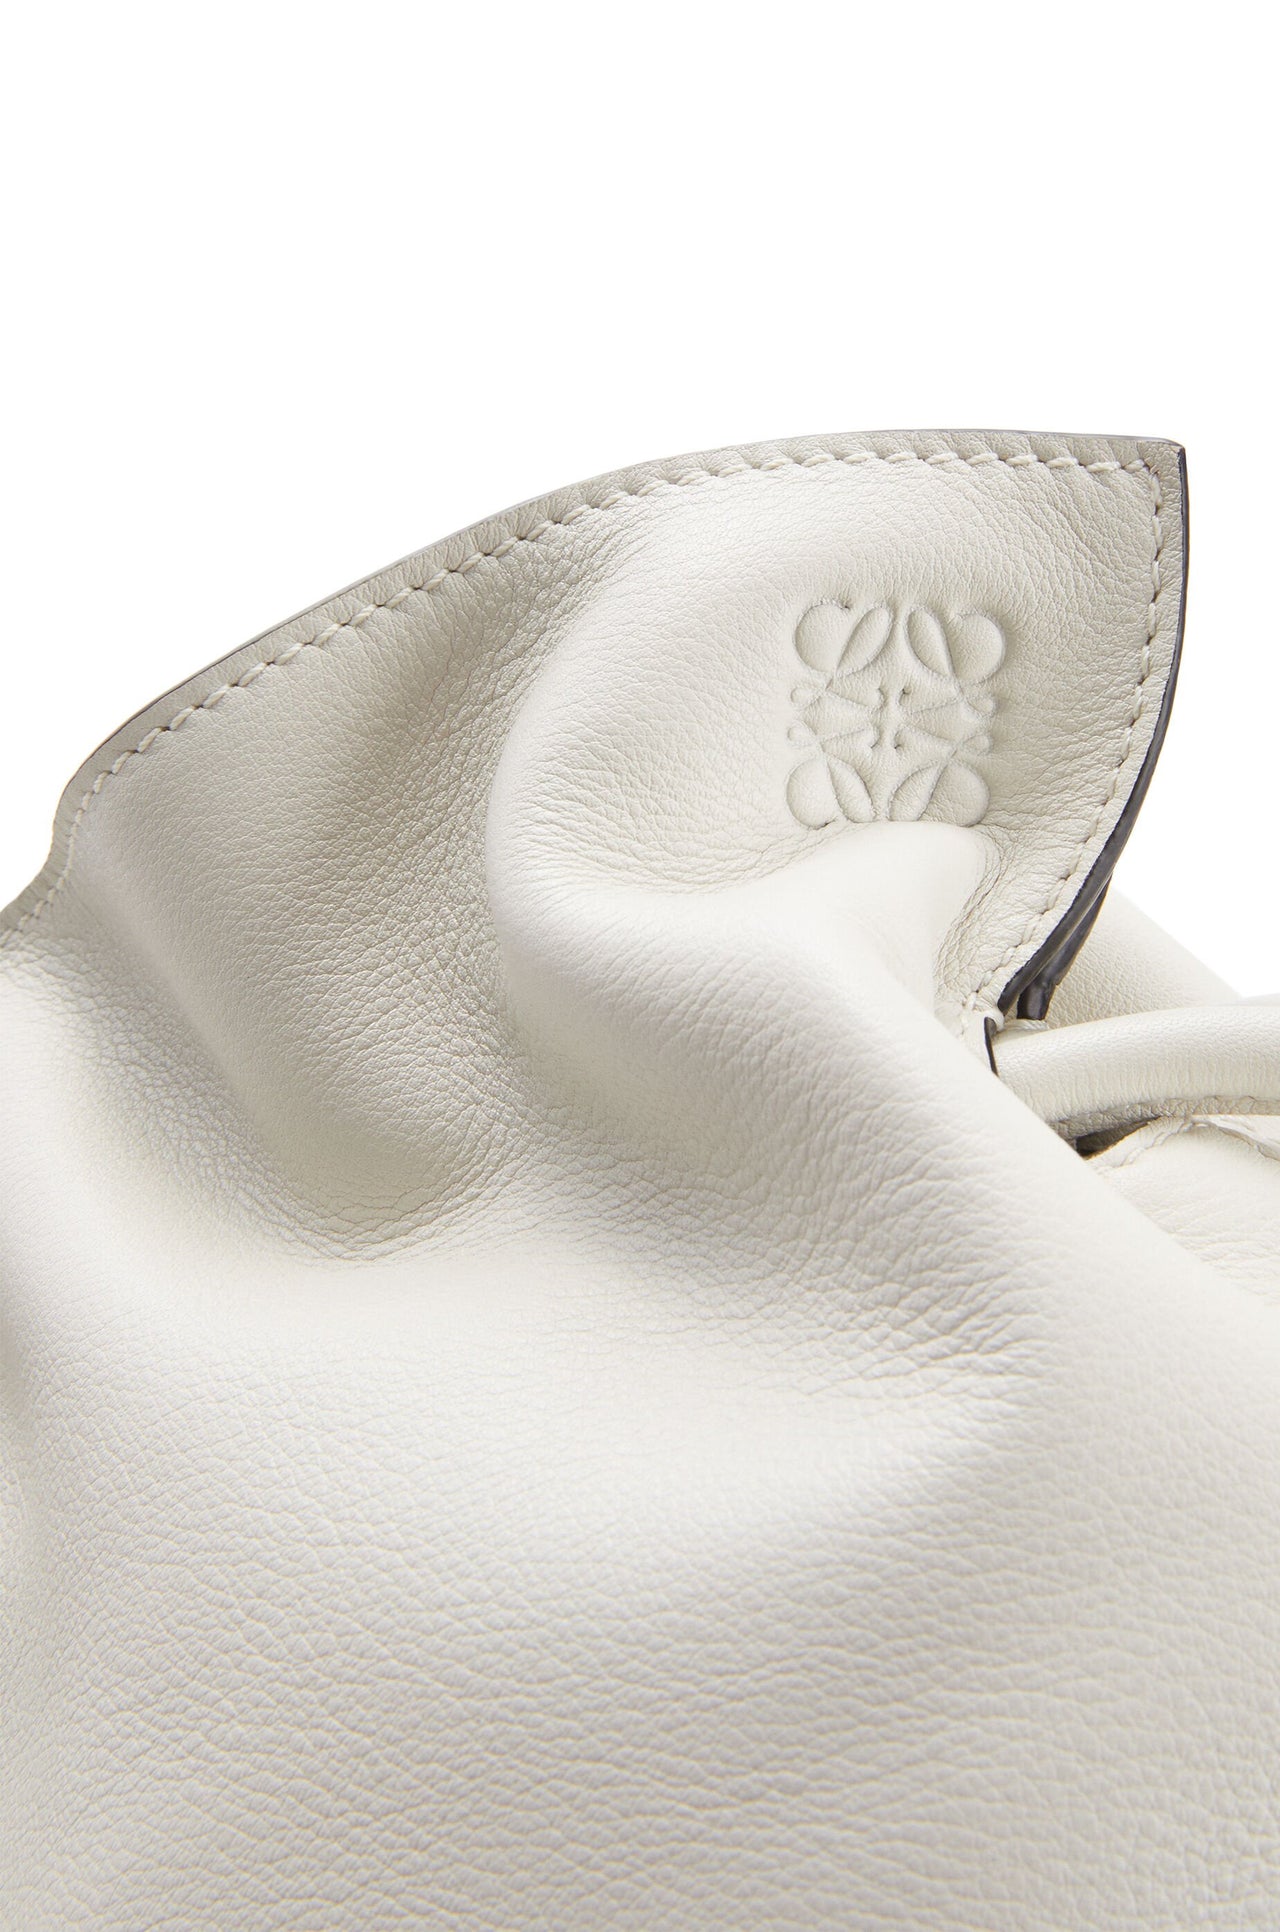 Loewe Medium Flamenco clutch in nappa calfskin (Colour: Soft White)